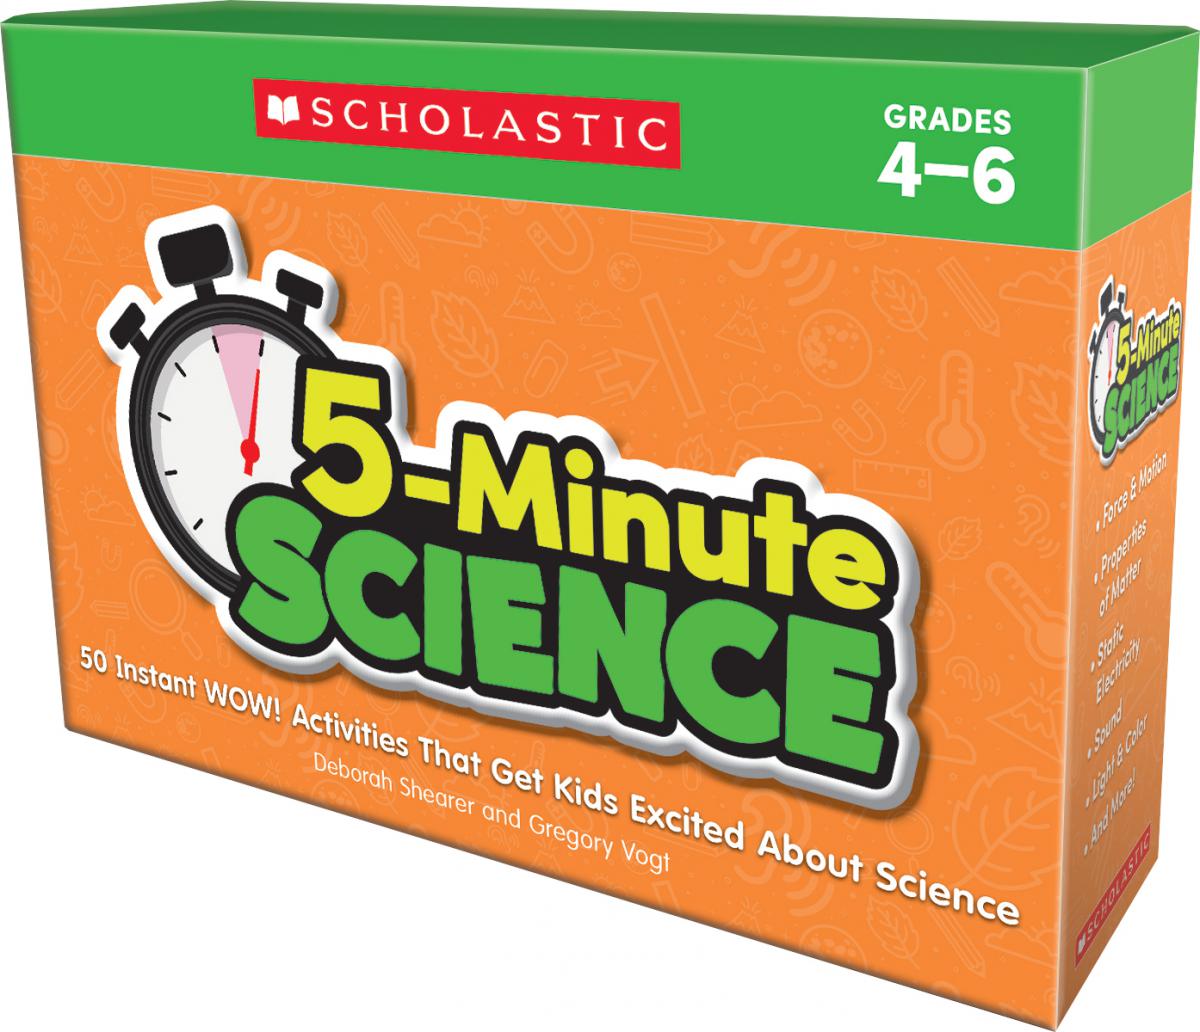  5-Minute Science: Grades 4-6 